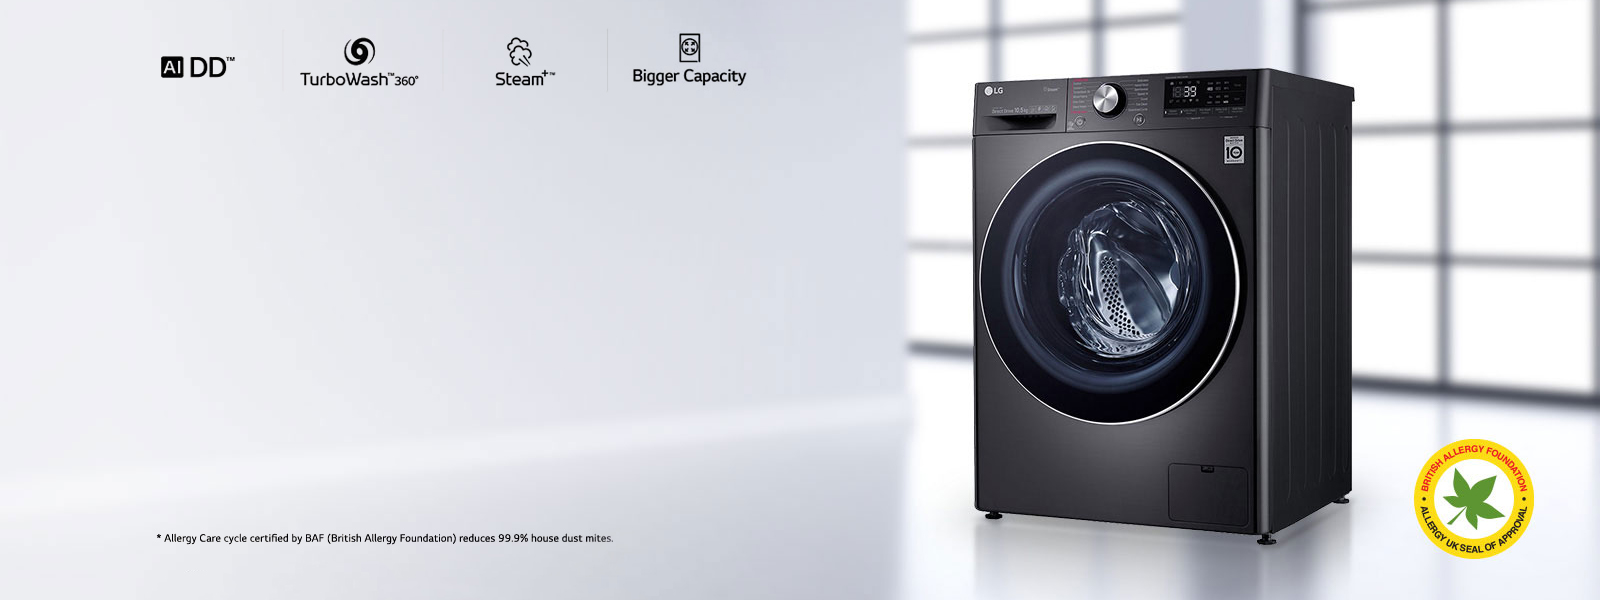 LG AI Direct Drive™ (AI DD™) Washing Machine1